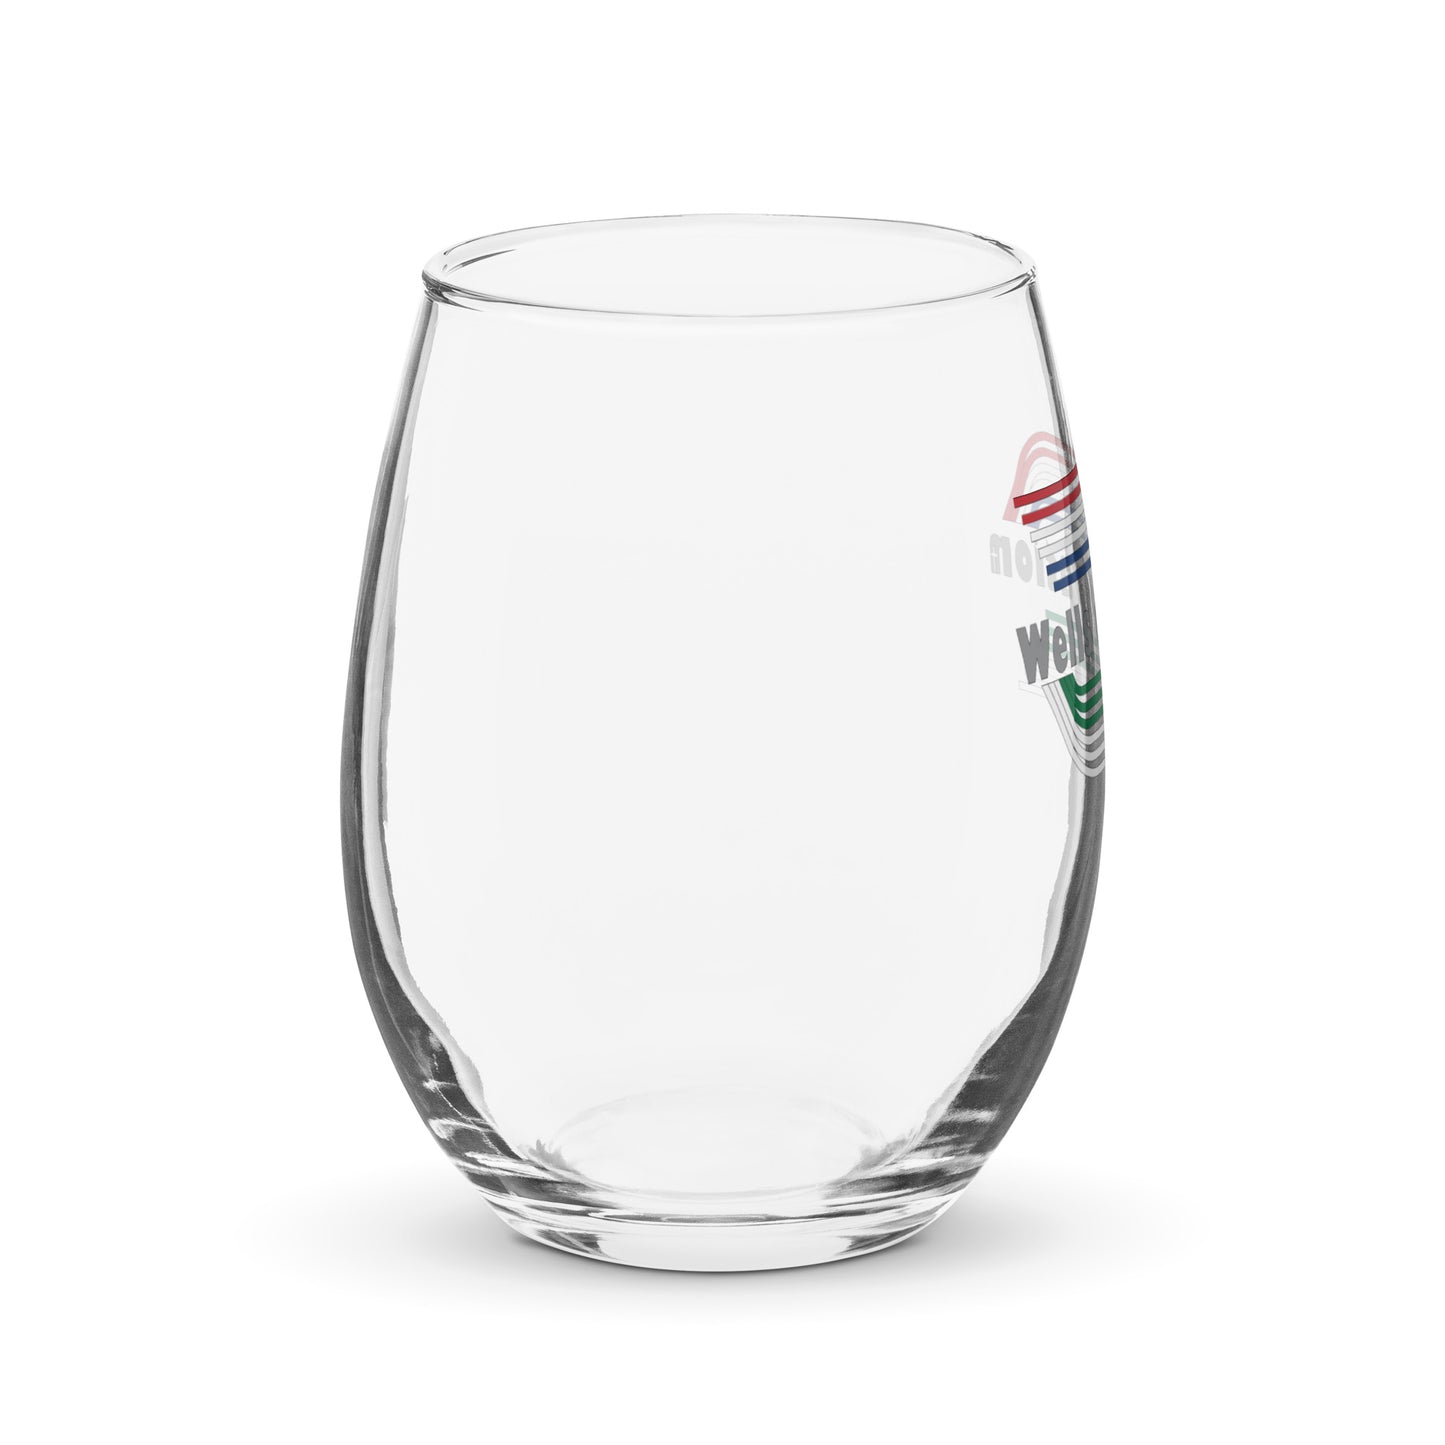 Wells Stemless wine glass